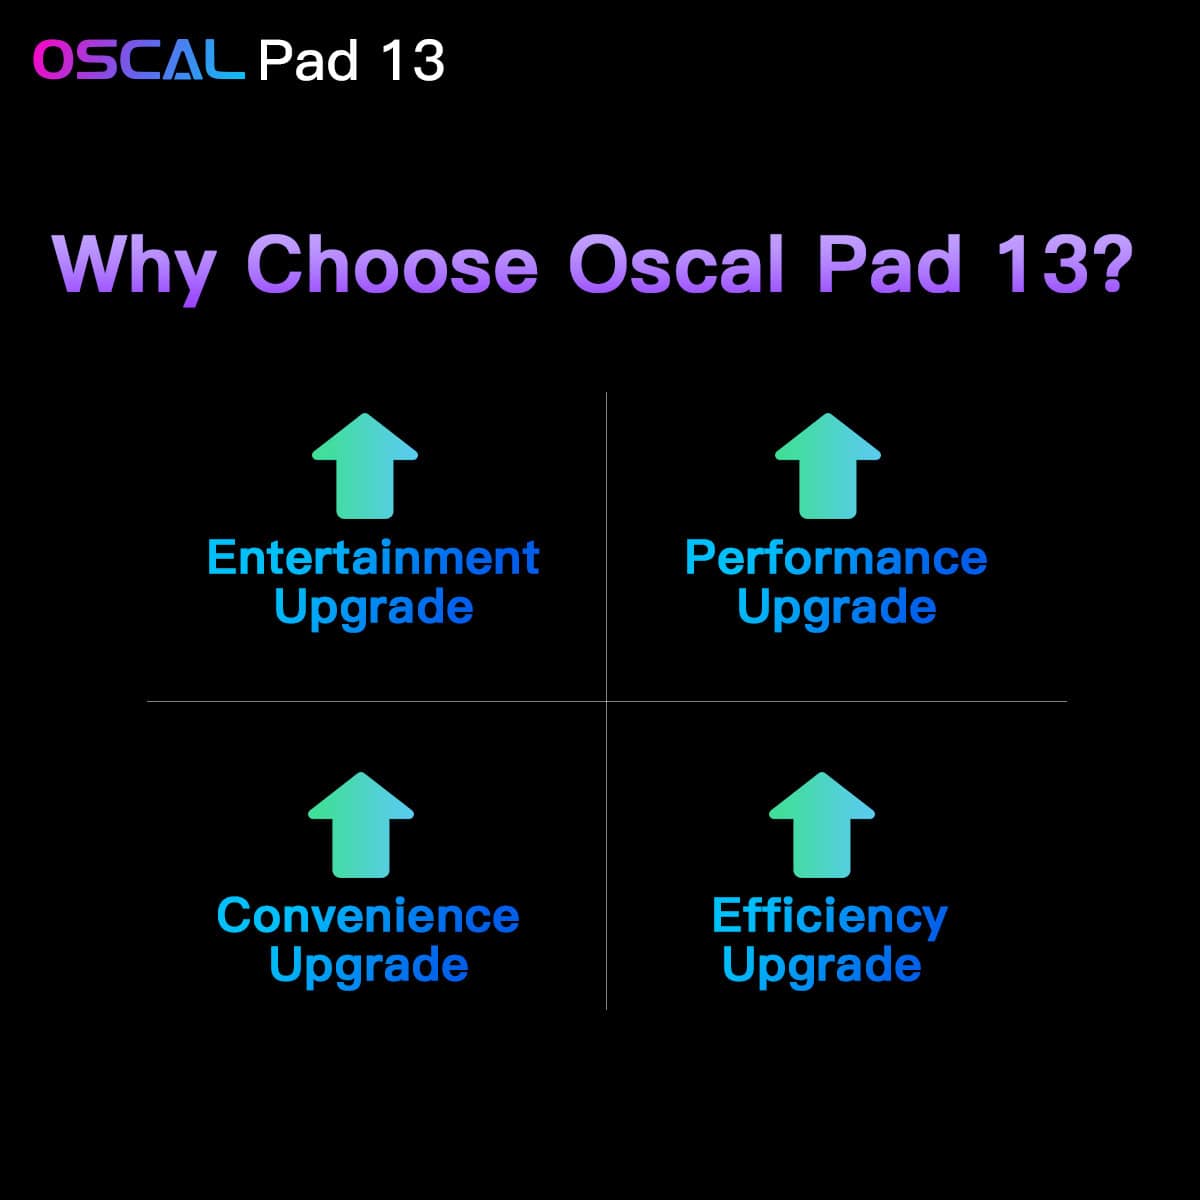 Oscal Pad 13 Upgrades